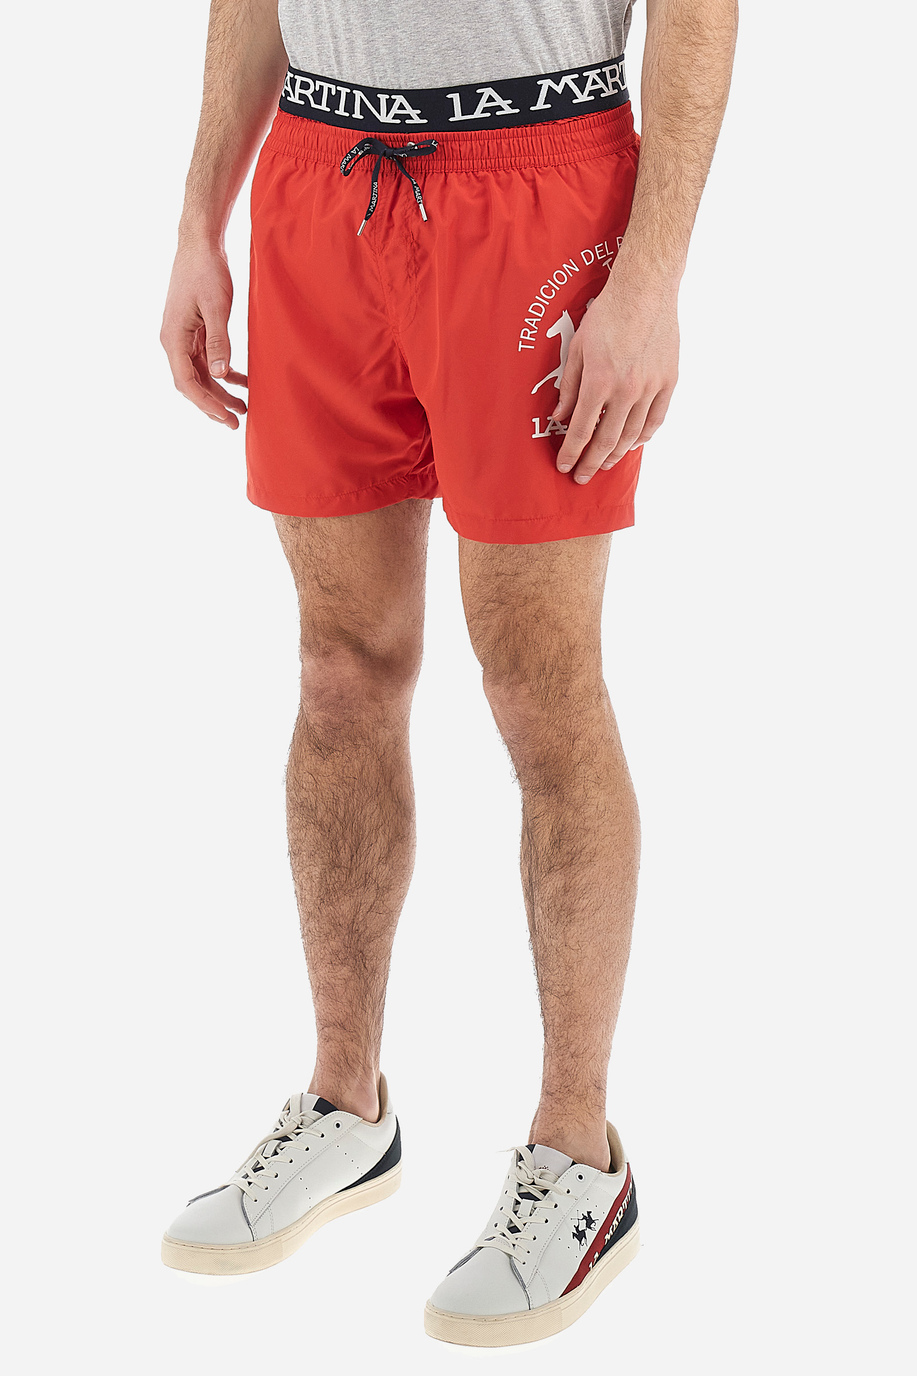 Regular fit men's swim trunks with drawstring waist - Virdis - Swimwear | La Martina - Official Online Shop